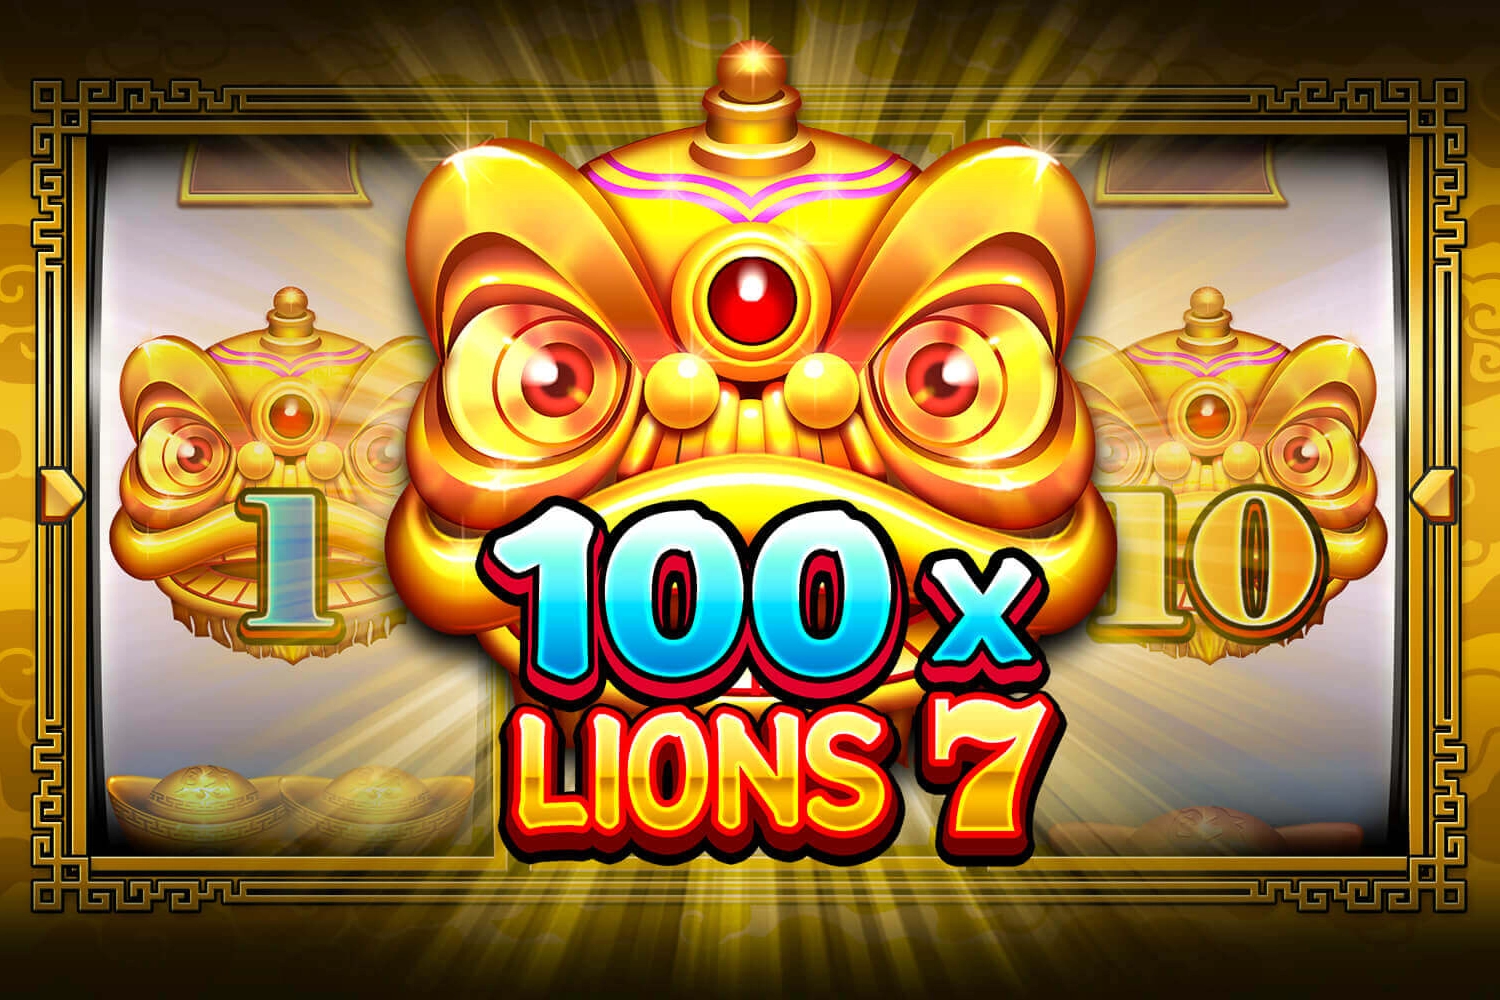 100x Lions 7